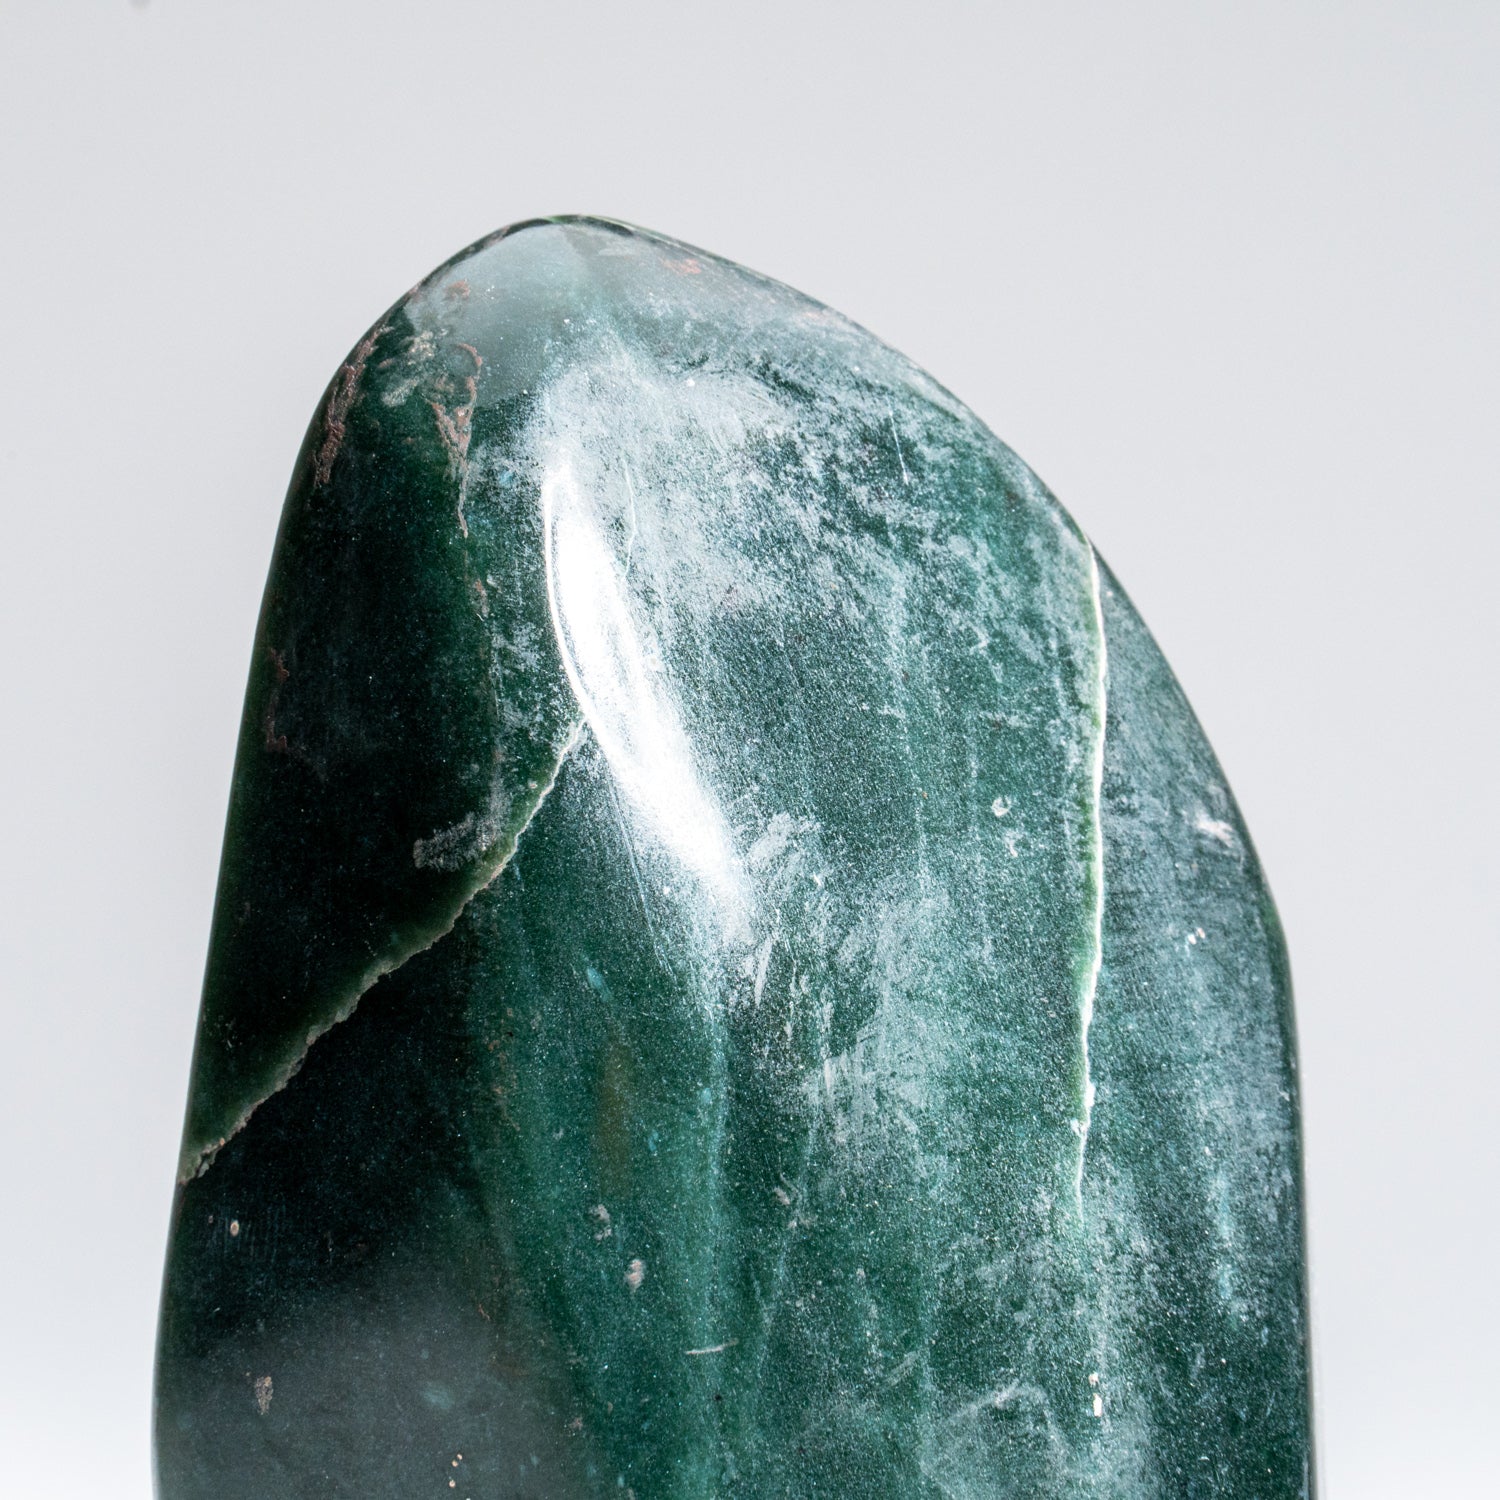 Polished Nephrite Jade Freeform from Pakistan (1.3 lbs)